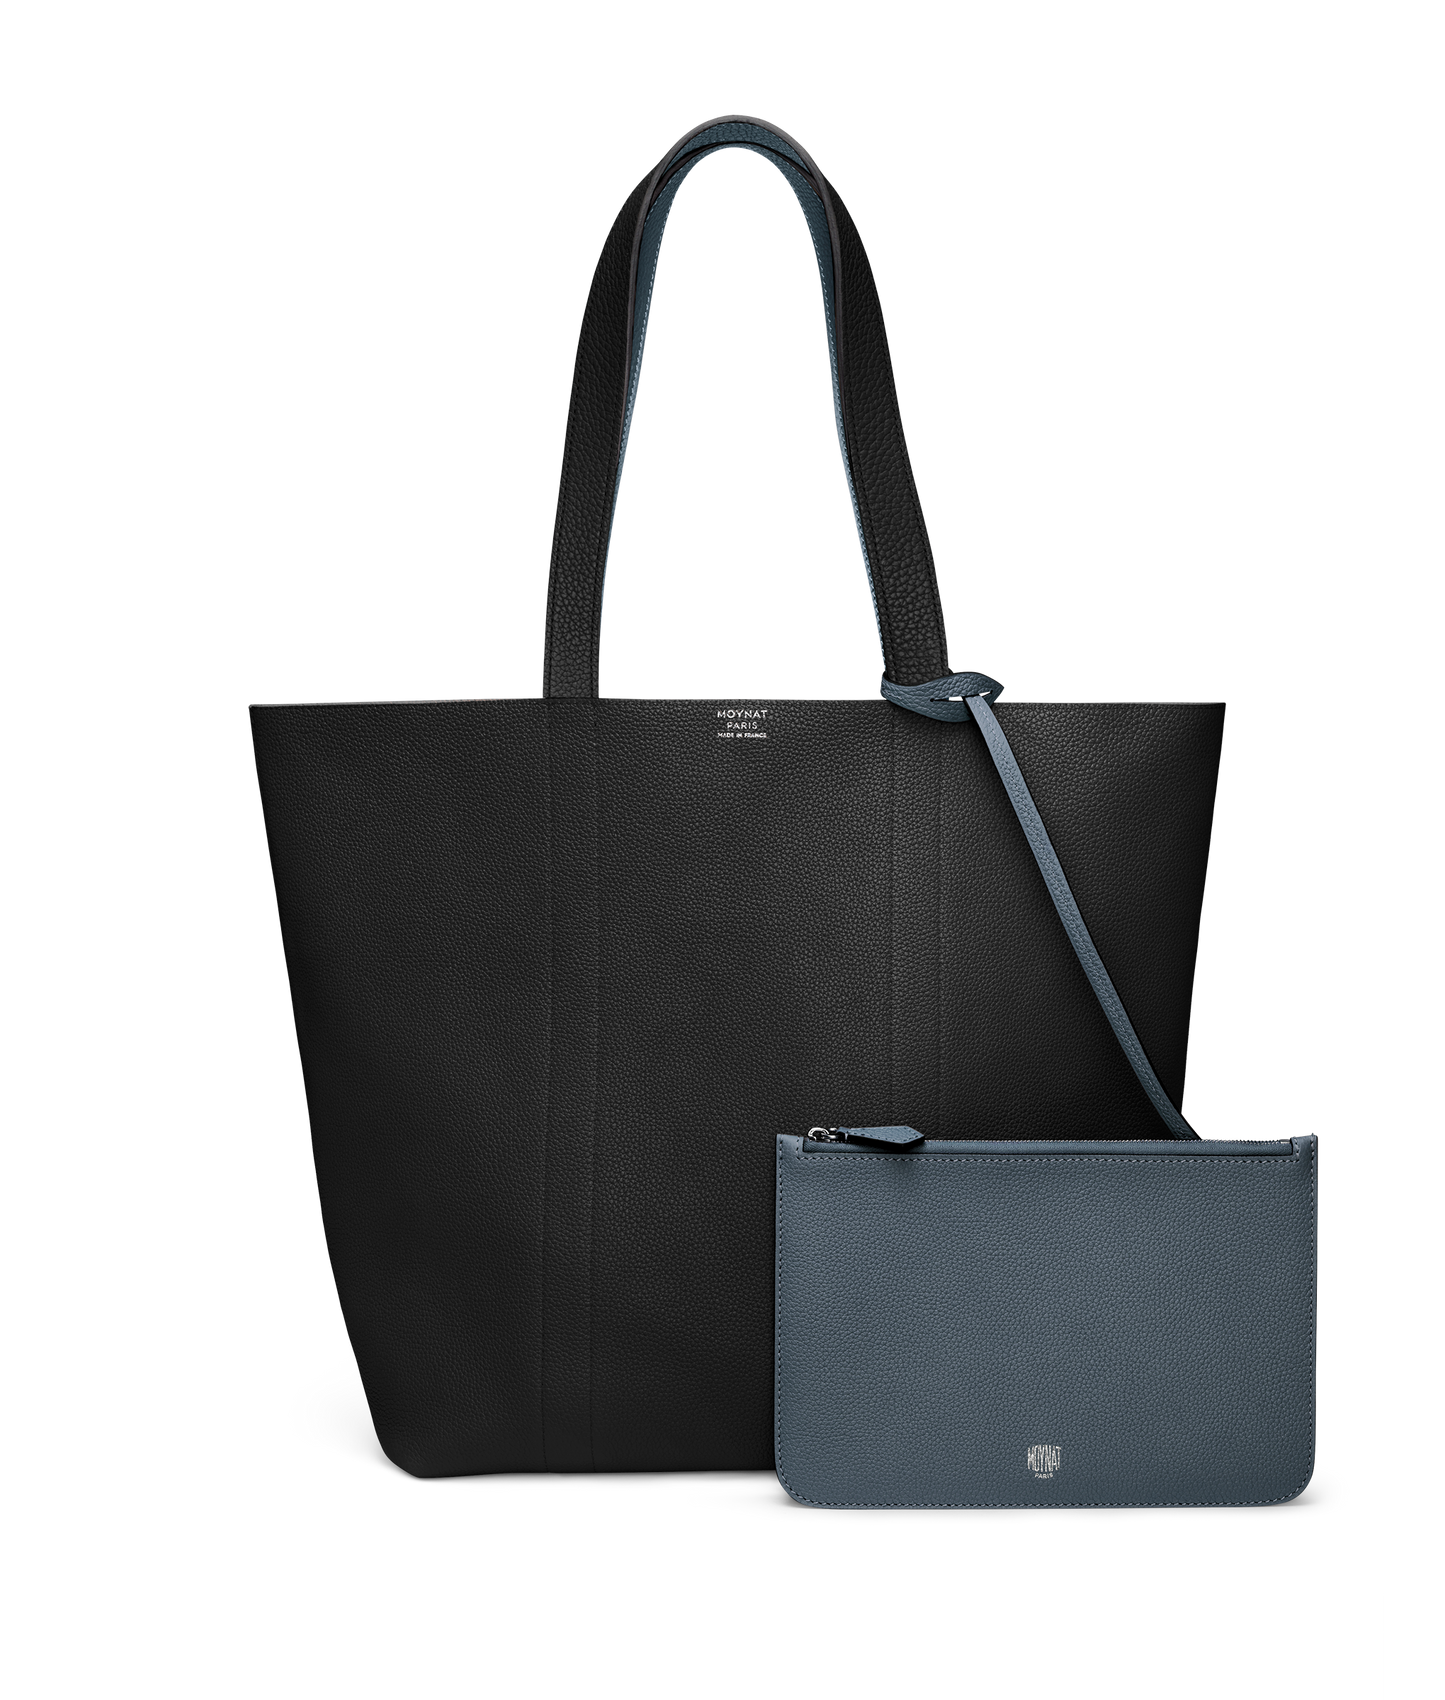 Moynat Leather Tote Bag - Blue Totes, Handbags - MOYNA20788